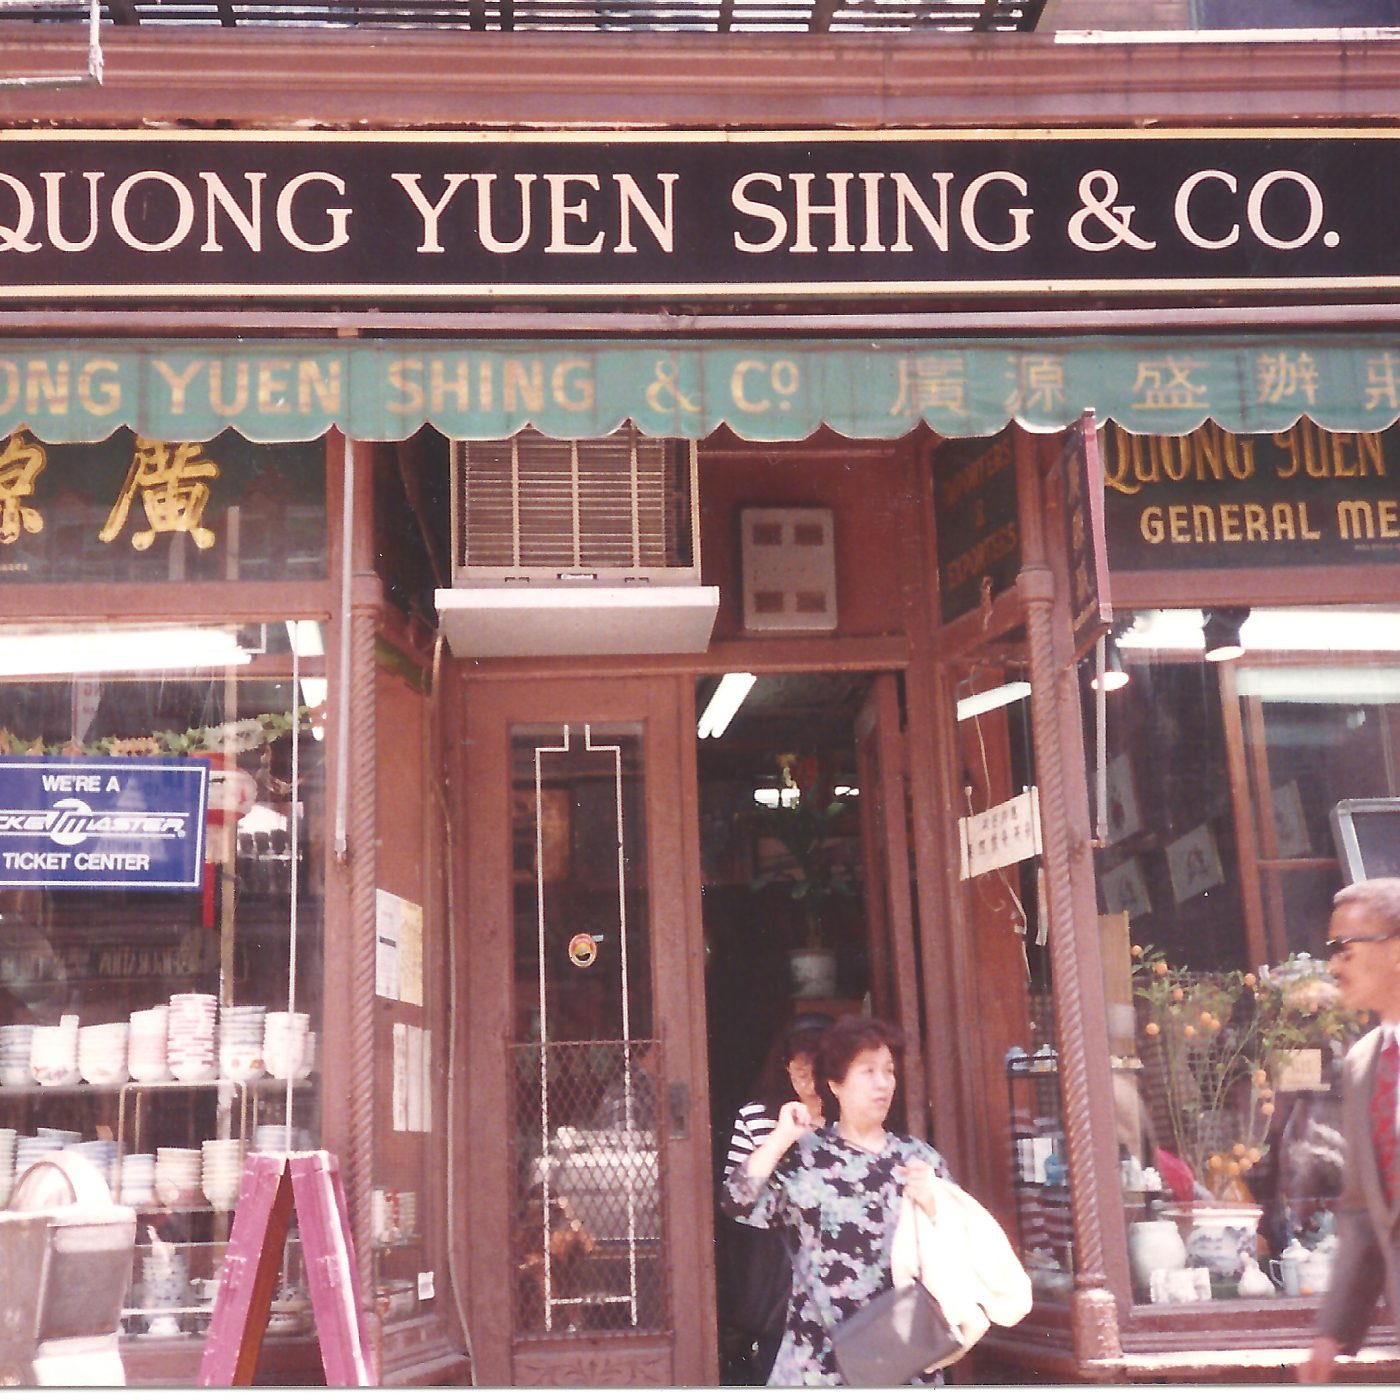 12 September 2019 Posted.
Building facade ca. 1992; Museum of Chinese in America (MOCA) Collection.
广源盛建筑正面，大约1992年；美国华人博物馆（MOCA）馆藏